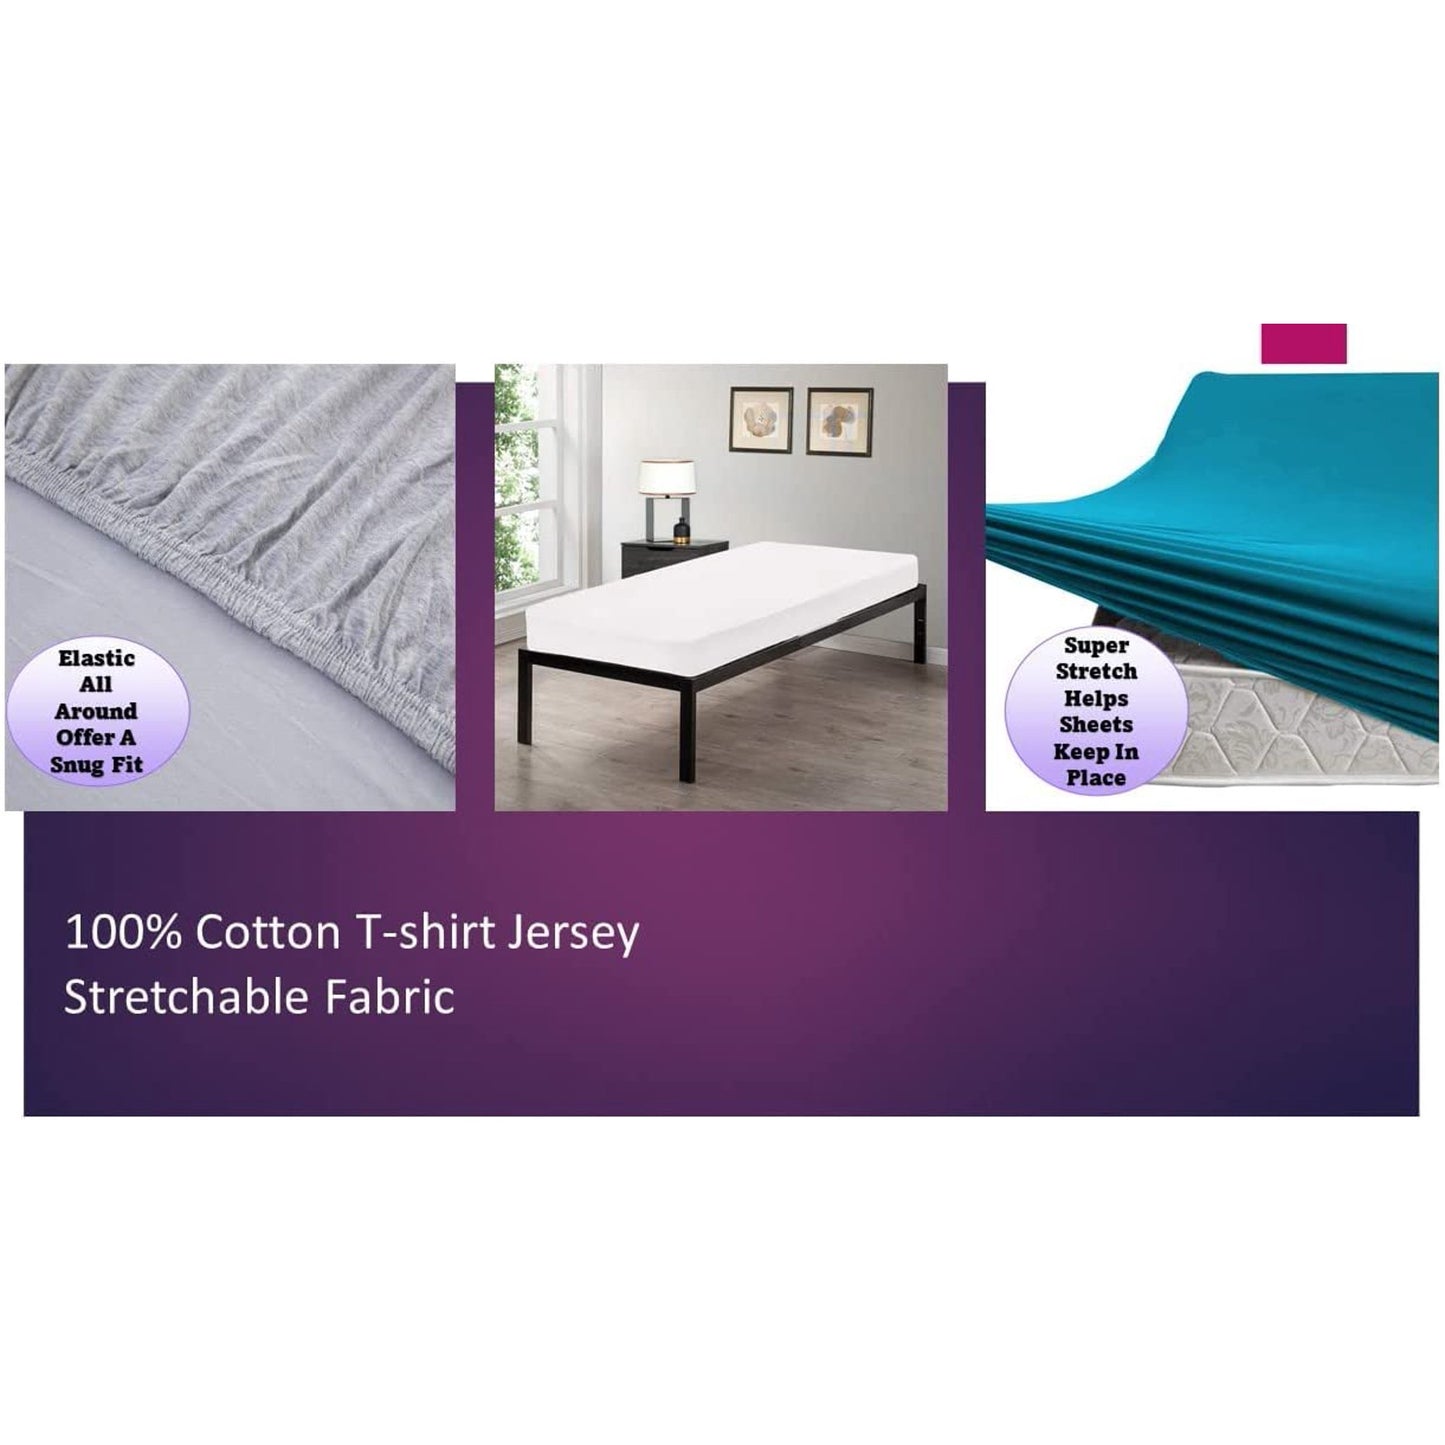 100% Combed T-Shirt Cotton Jersey Knit Camp Sheet Set, 1 Fitted cot Sheet, 1 Flat Sheet, 1 Standard Pillow case Royal Blue